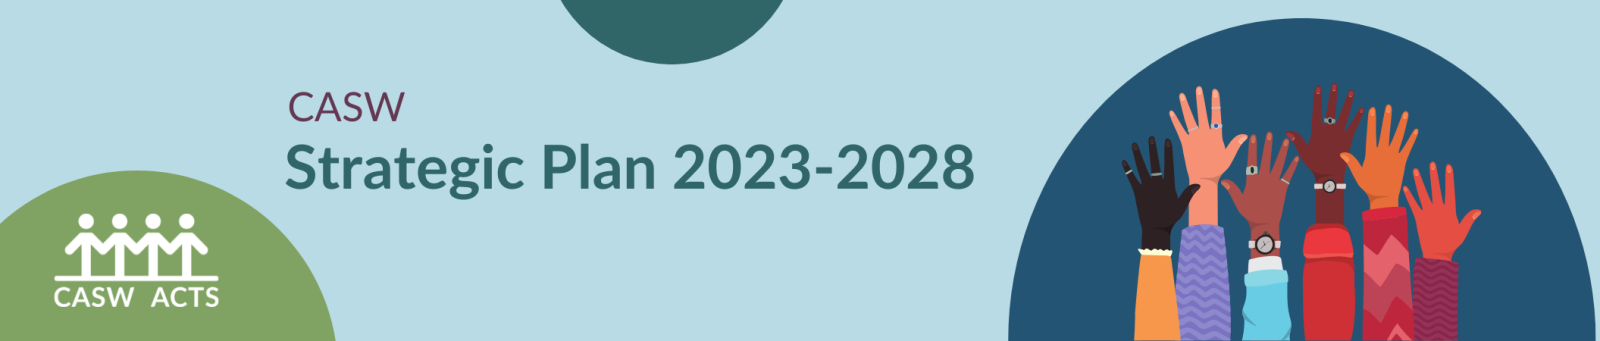 CASW Strategic Plan 2023 - 2028